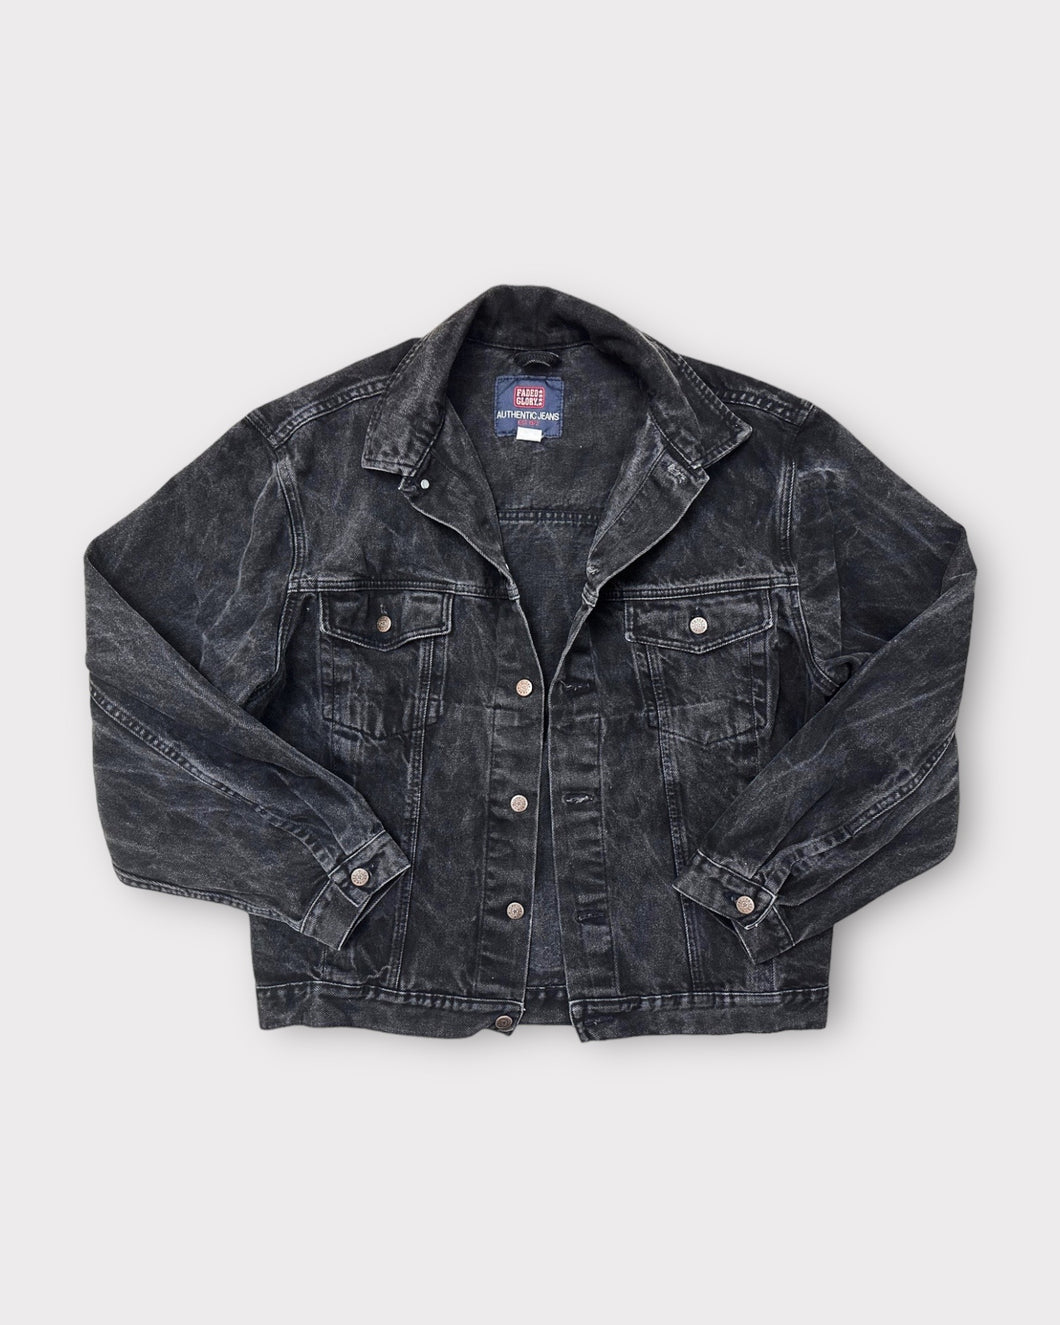 Faded Glory Authentic Jeans Black Vintage Denim Jacket (XL)